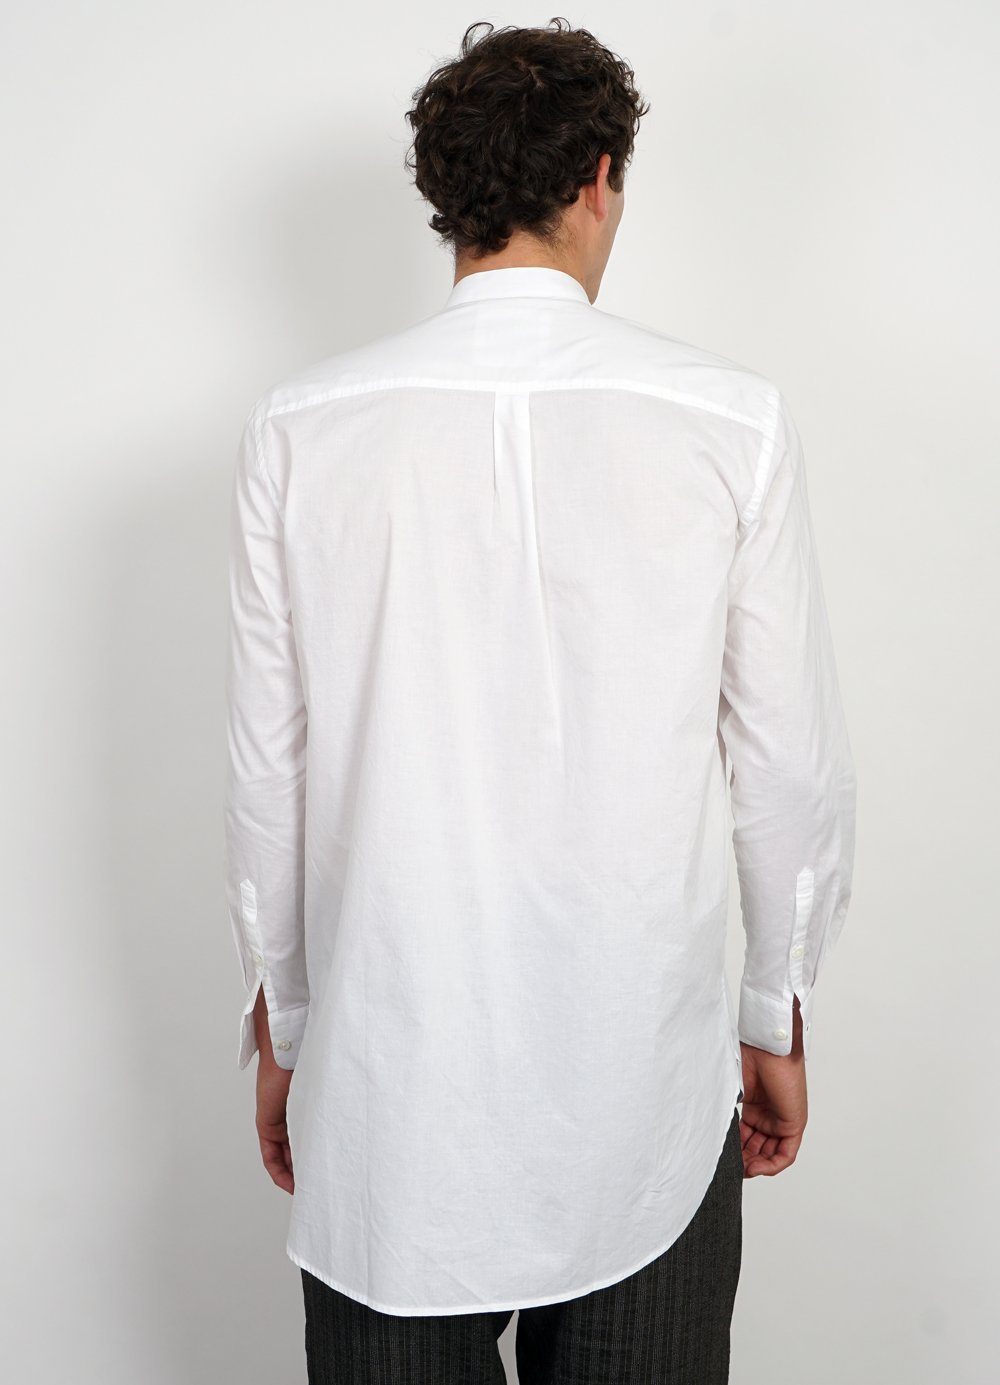 BASSE | Pleated Bib Shirt | White -HANSEN Garments- HANSEN Garments